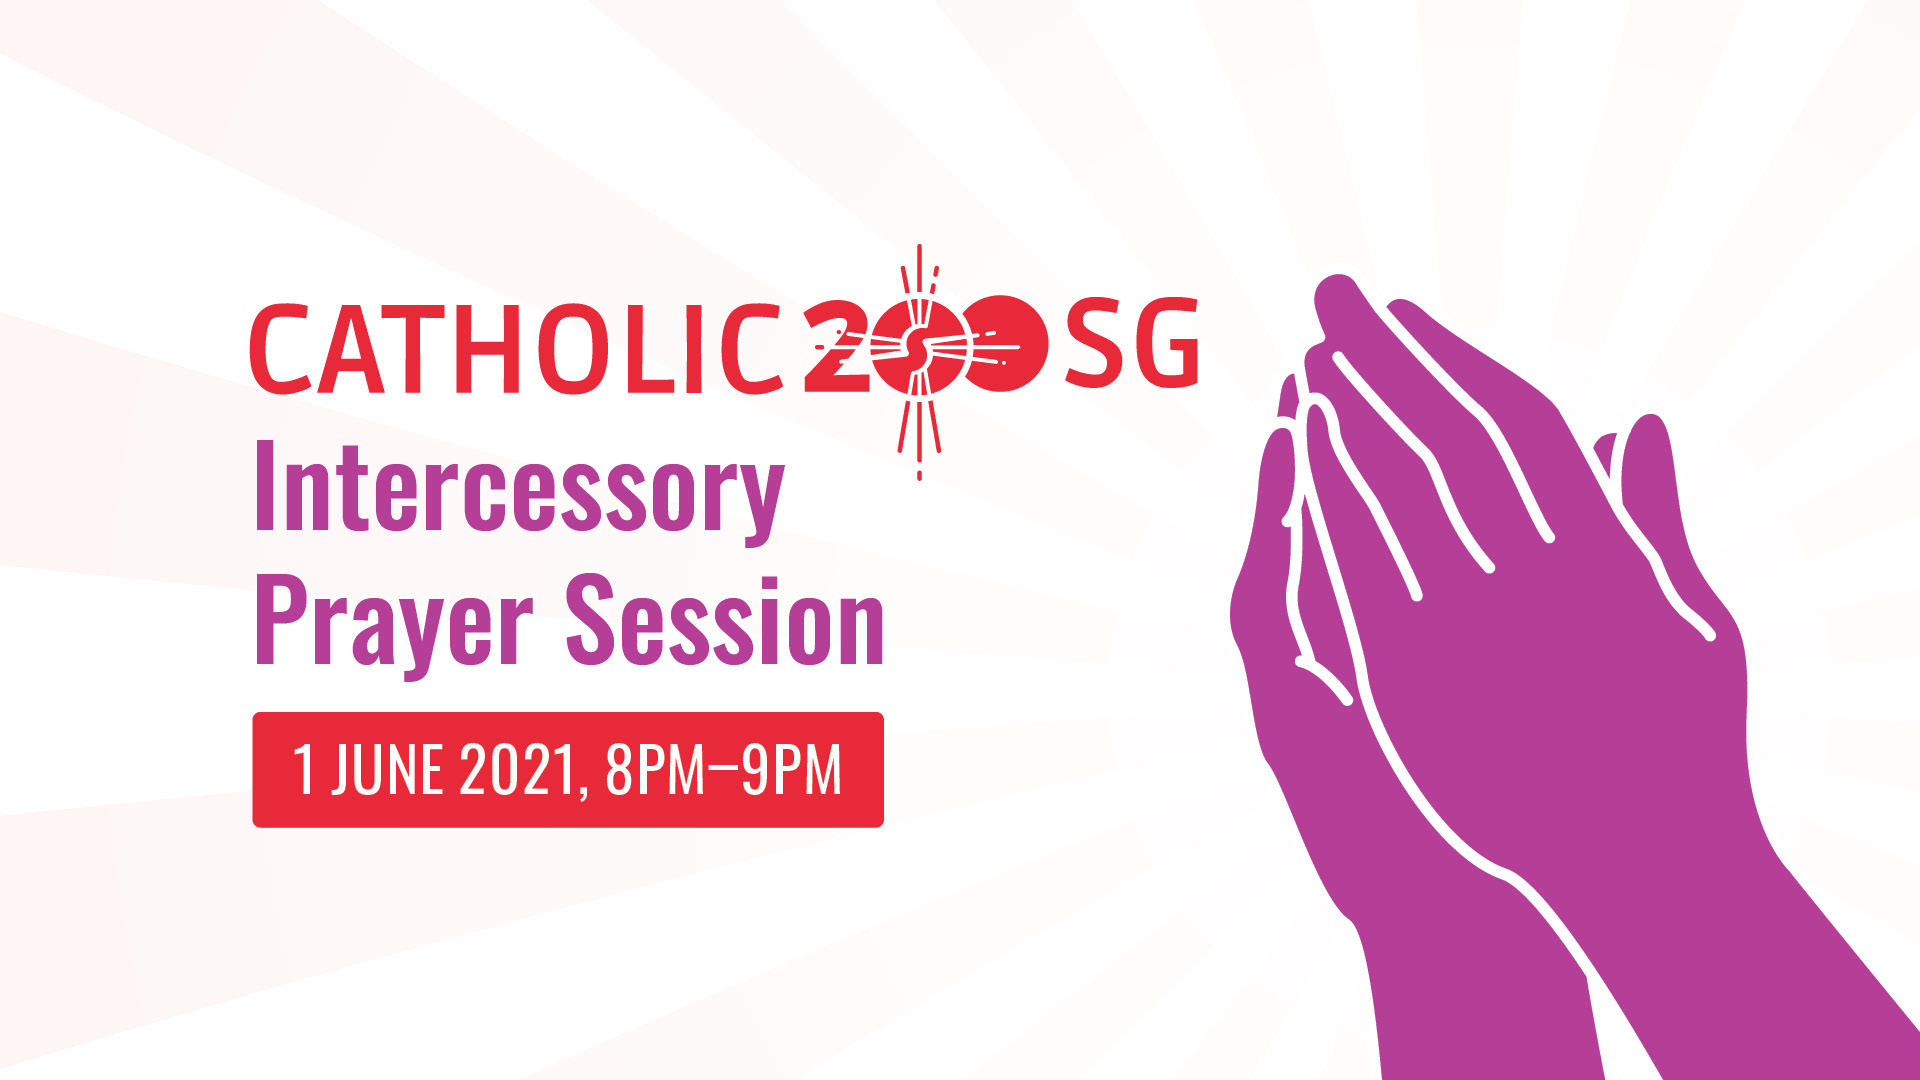 ACCS to Lead Catholic200SG Intercessory Prayer Session